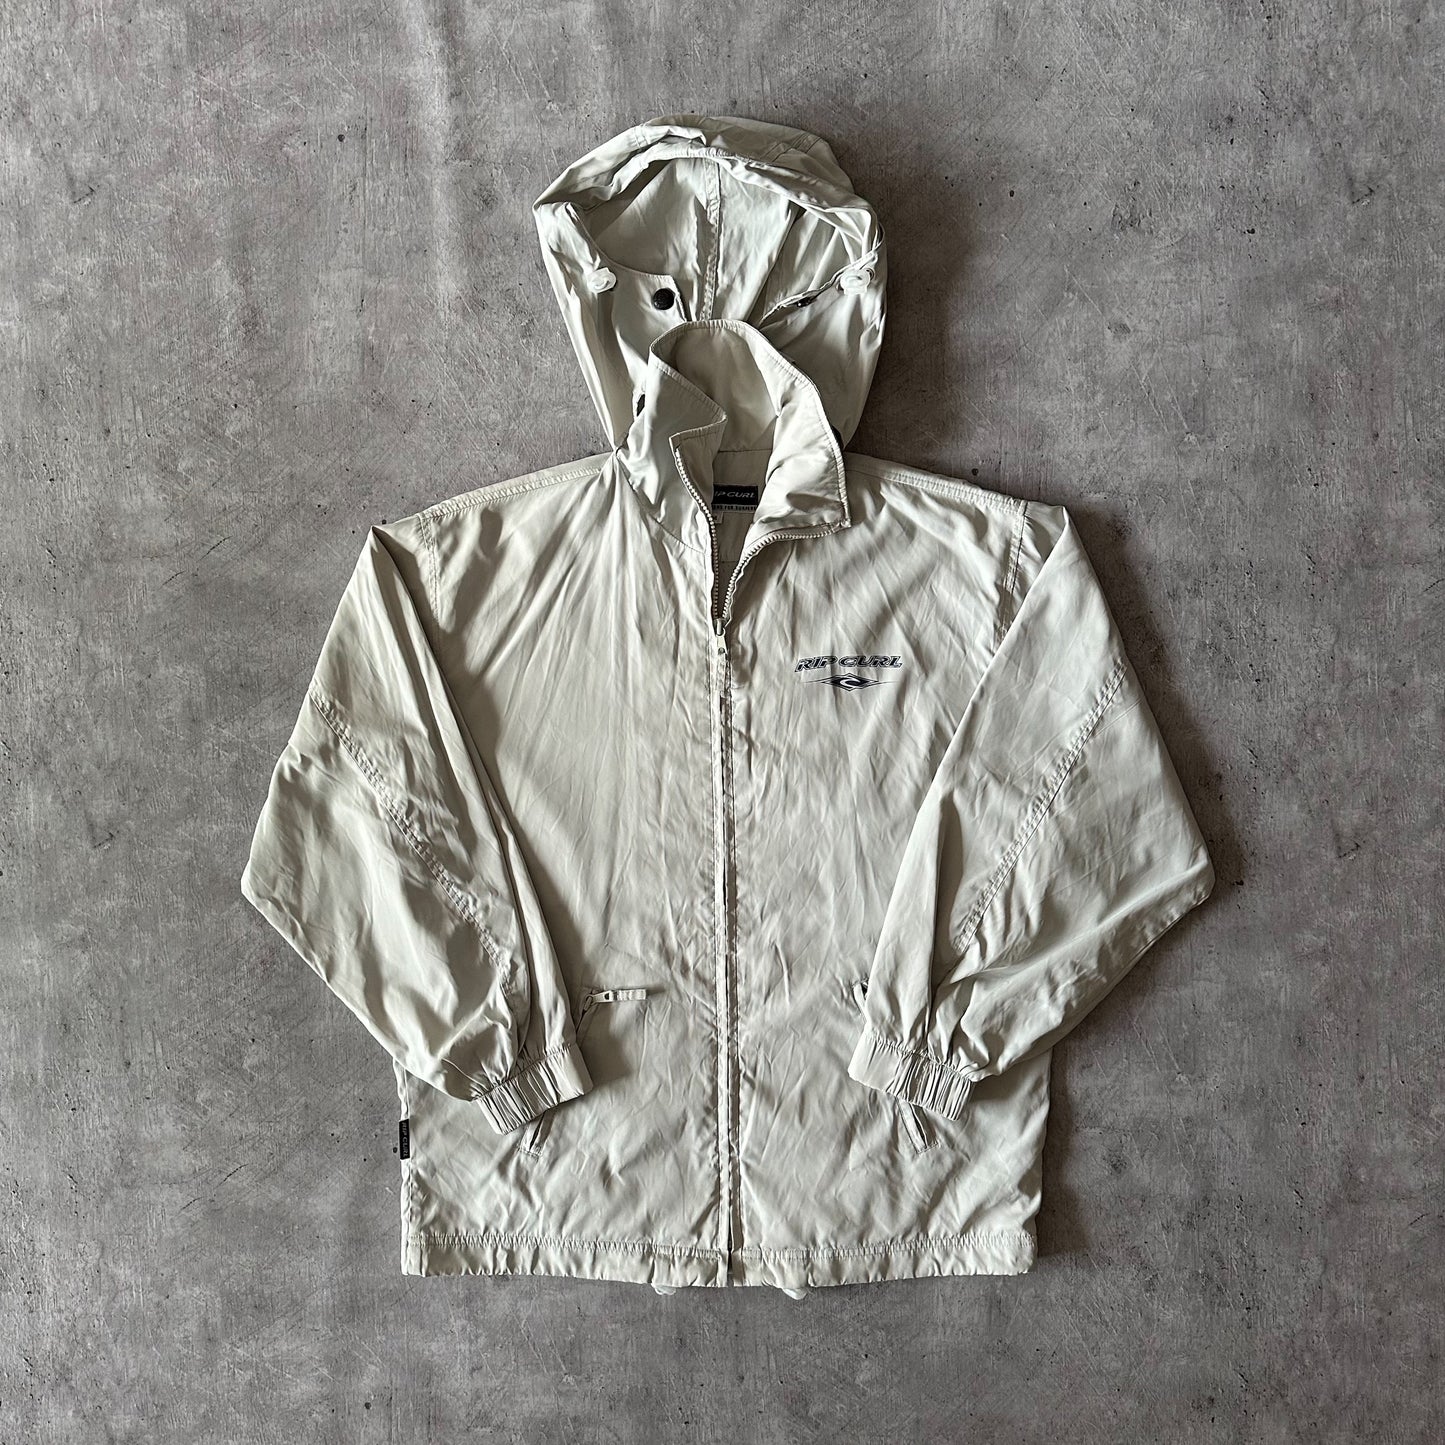 Vintage Rip Curl Rain Jacket